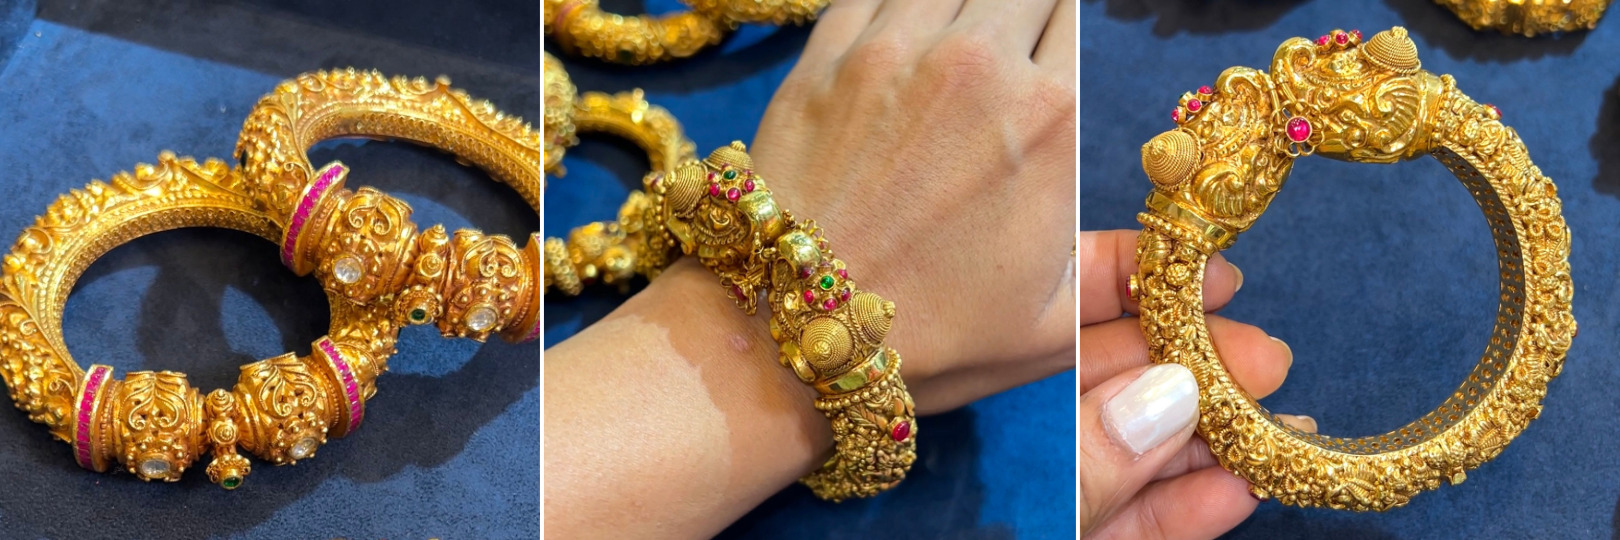 The India Gem & Jewellery Show (GJS) #HumaraApnaShow | The Diamond Talk | Renu Chaudhary